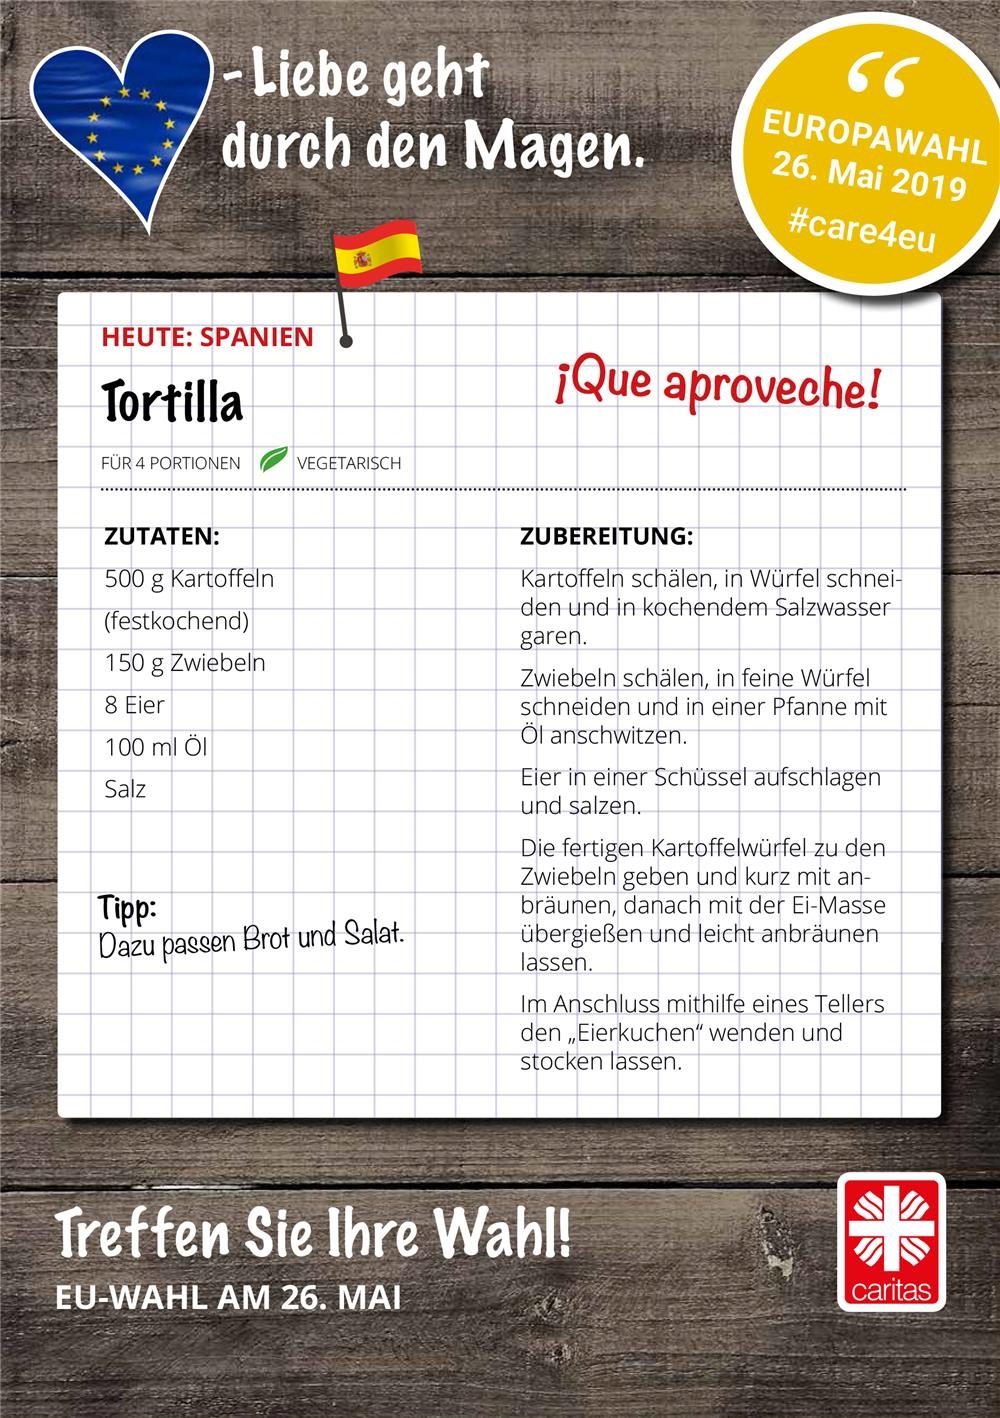 Spanien "Tortilla" 21.05.2019 